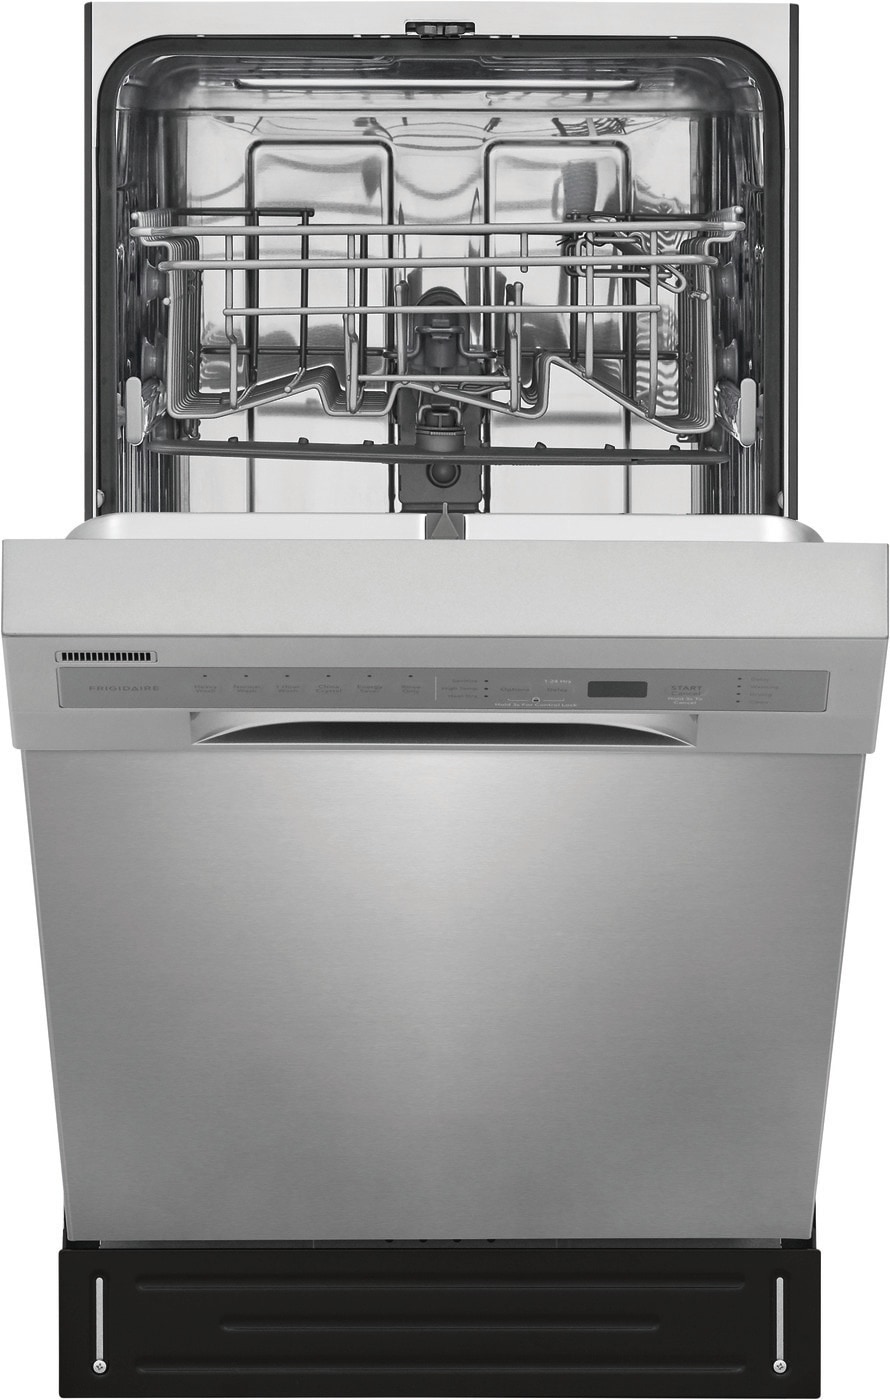 Frigidaire&nbsp;18" Stainless Steel Tub Dishwasher - image 3 of 9